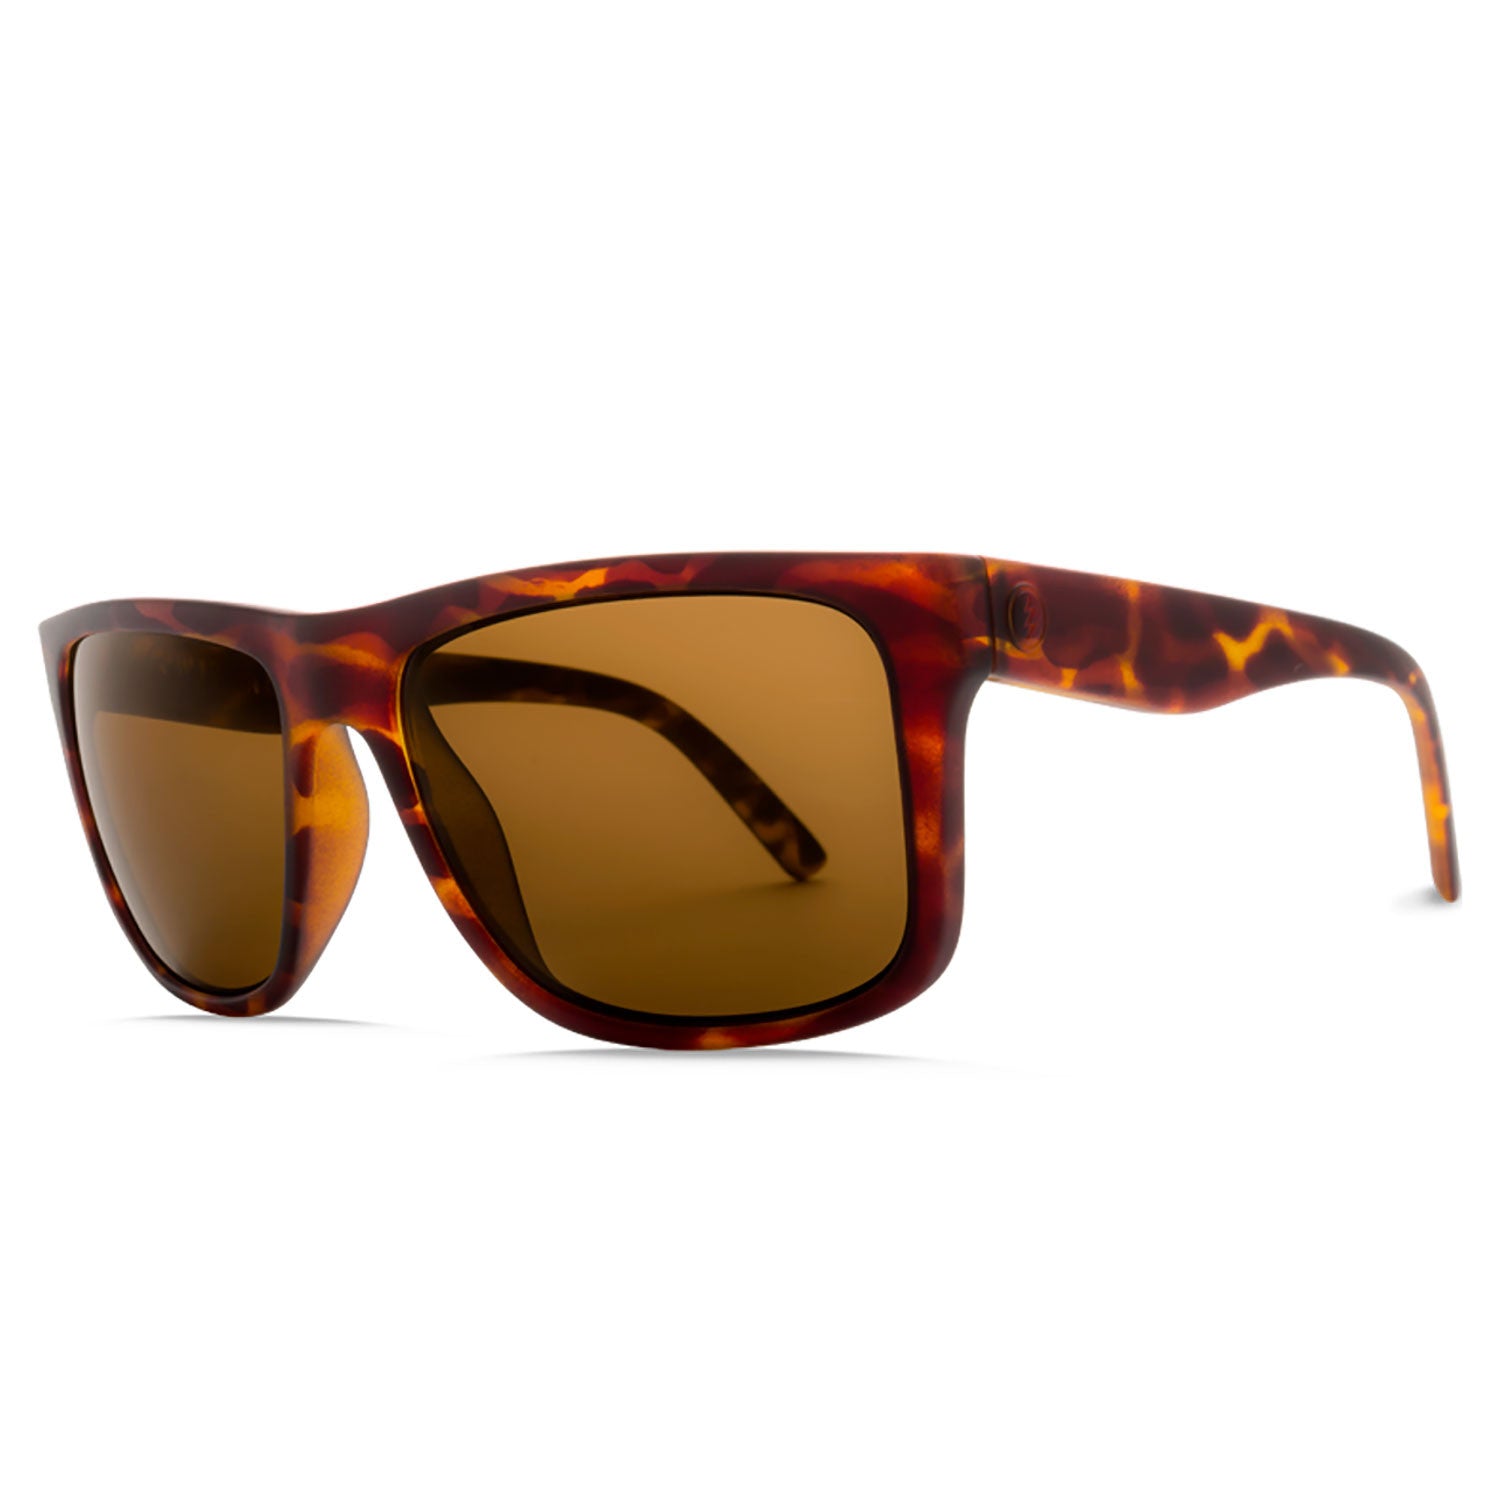 Electric Swingarm XL Sunglasses - Matte Tortoise - OHM Bronze Polarized  Lens - Men's